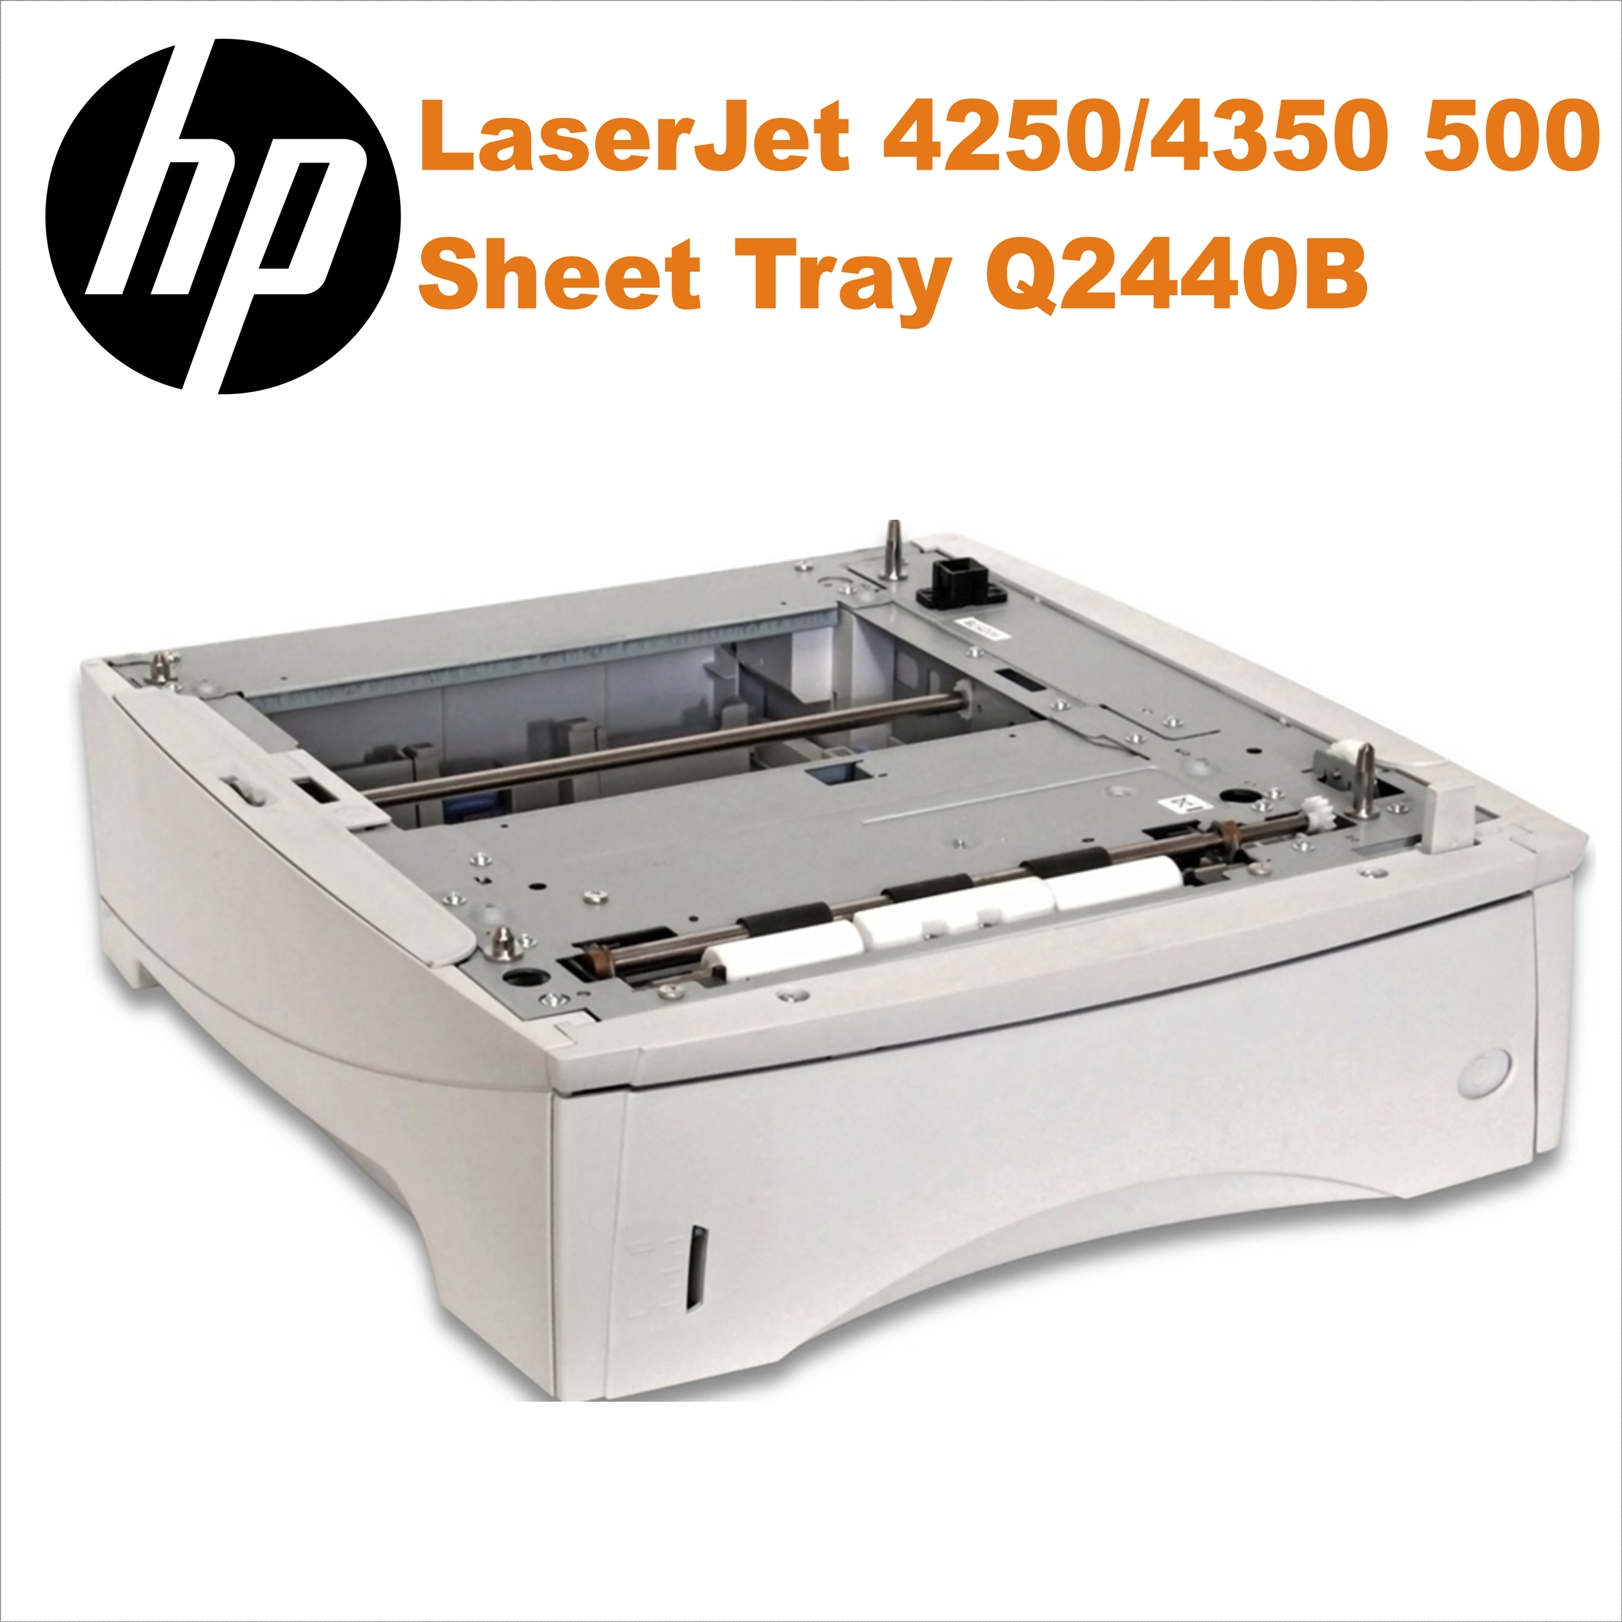 HP LaserJet 4250/4350 500 Sheet Tray Q2440B